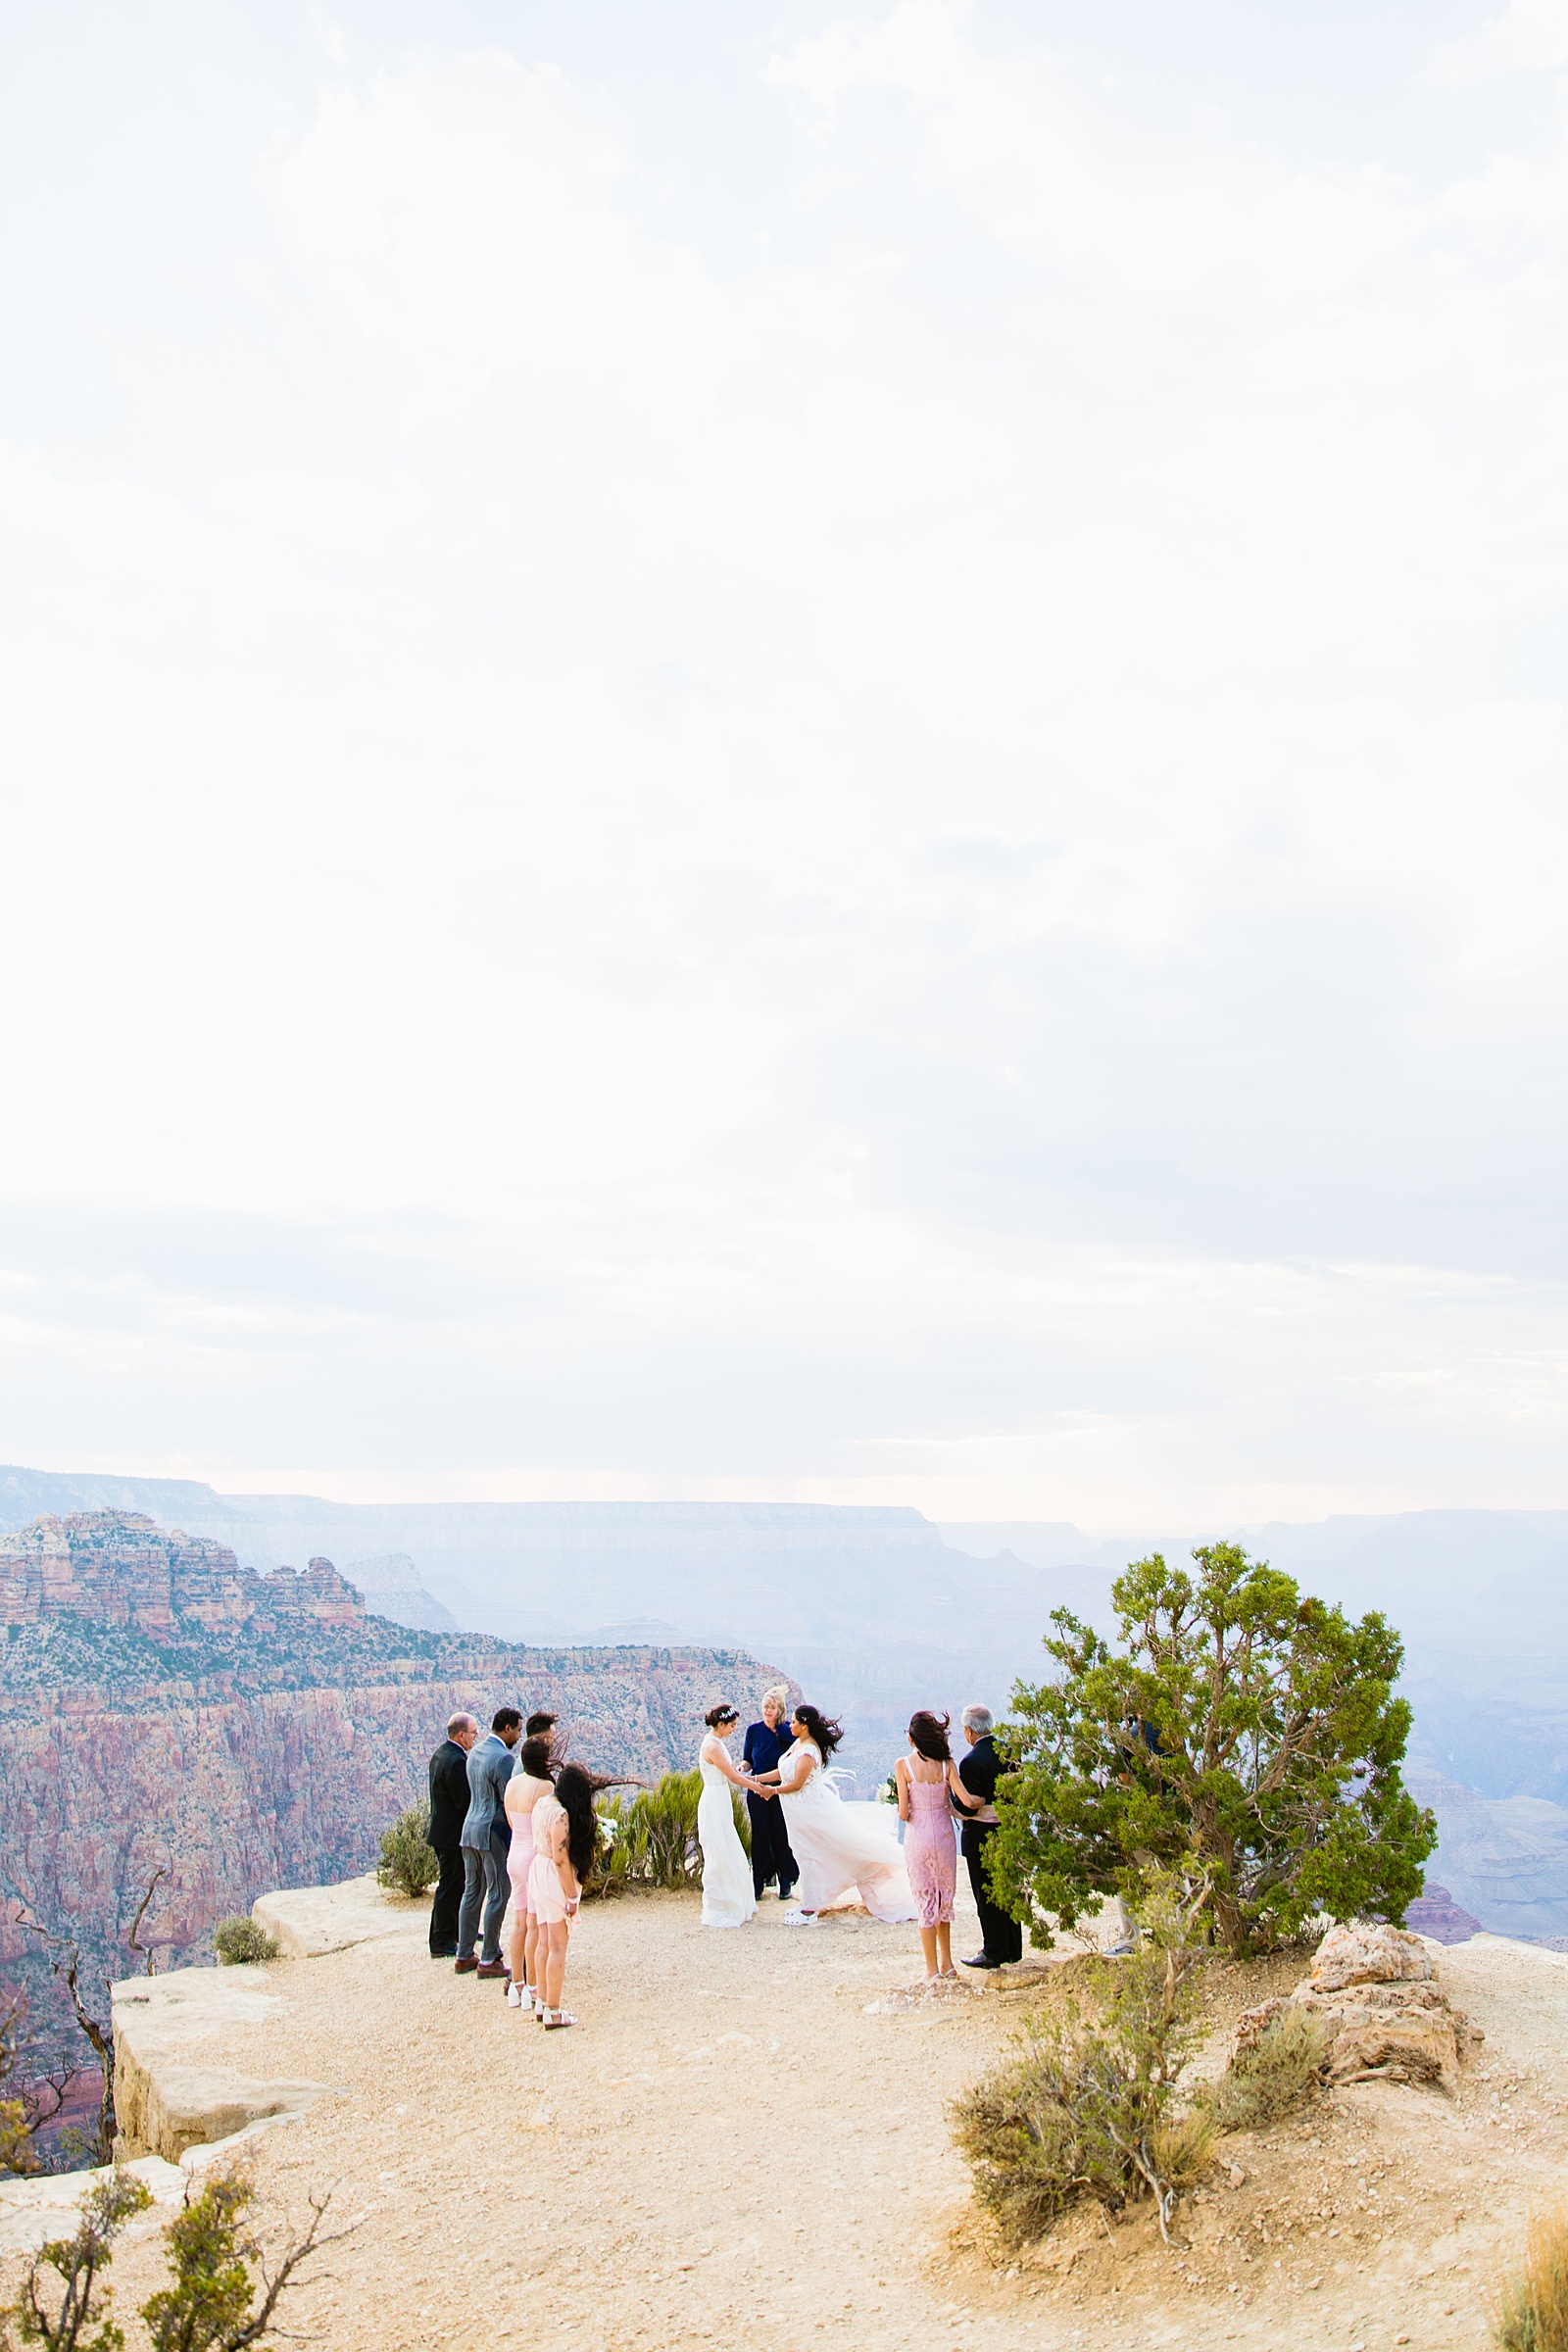 LGBTQ+ wedding ceremony at Moran Point, Grand Canyon by Arizona elopement photographer PMA Photography.